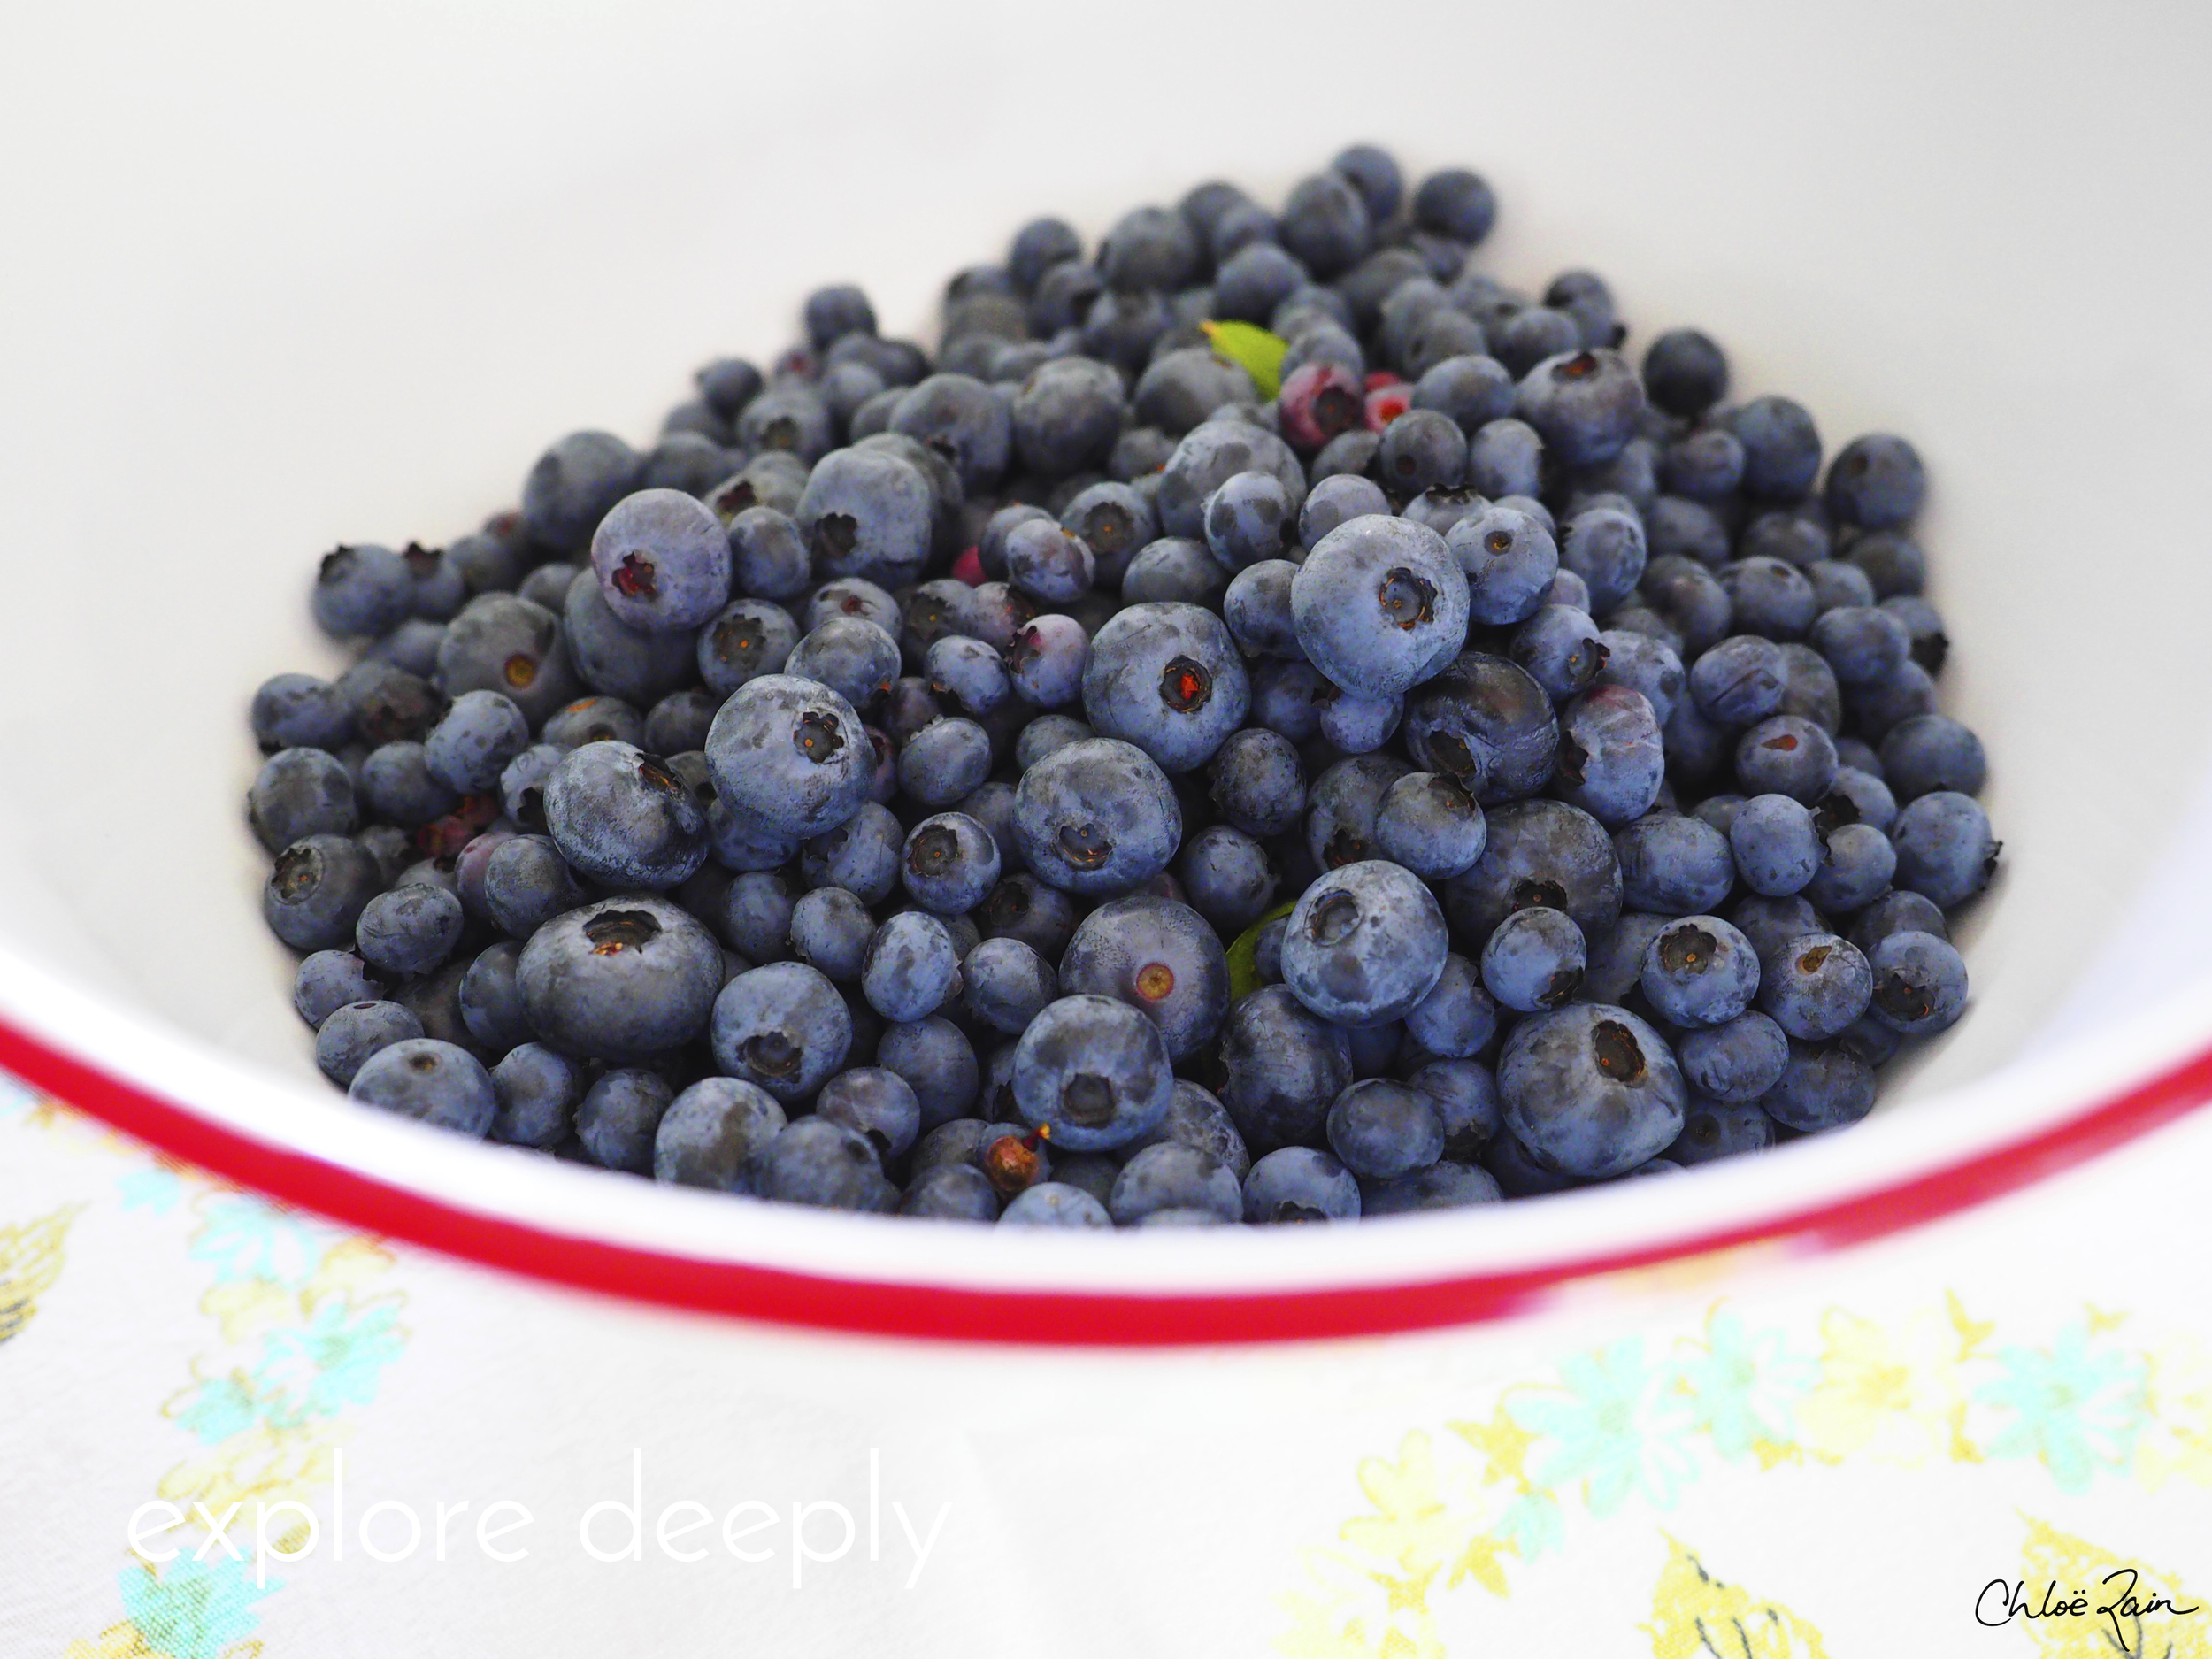 Abundance of Goodness, fresh blueberries from the garden (Copy)